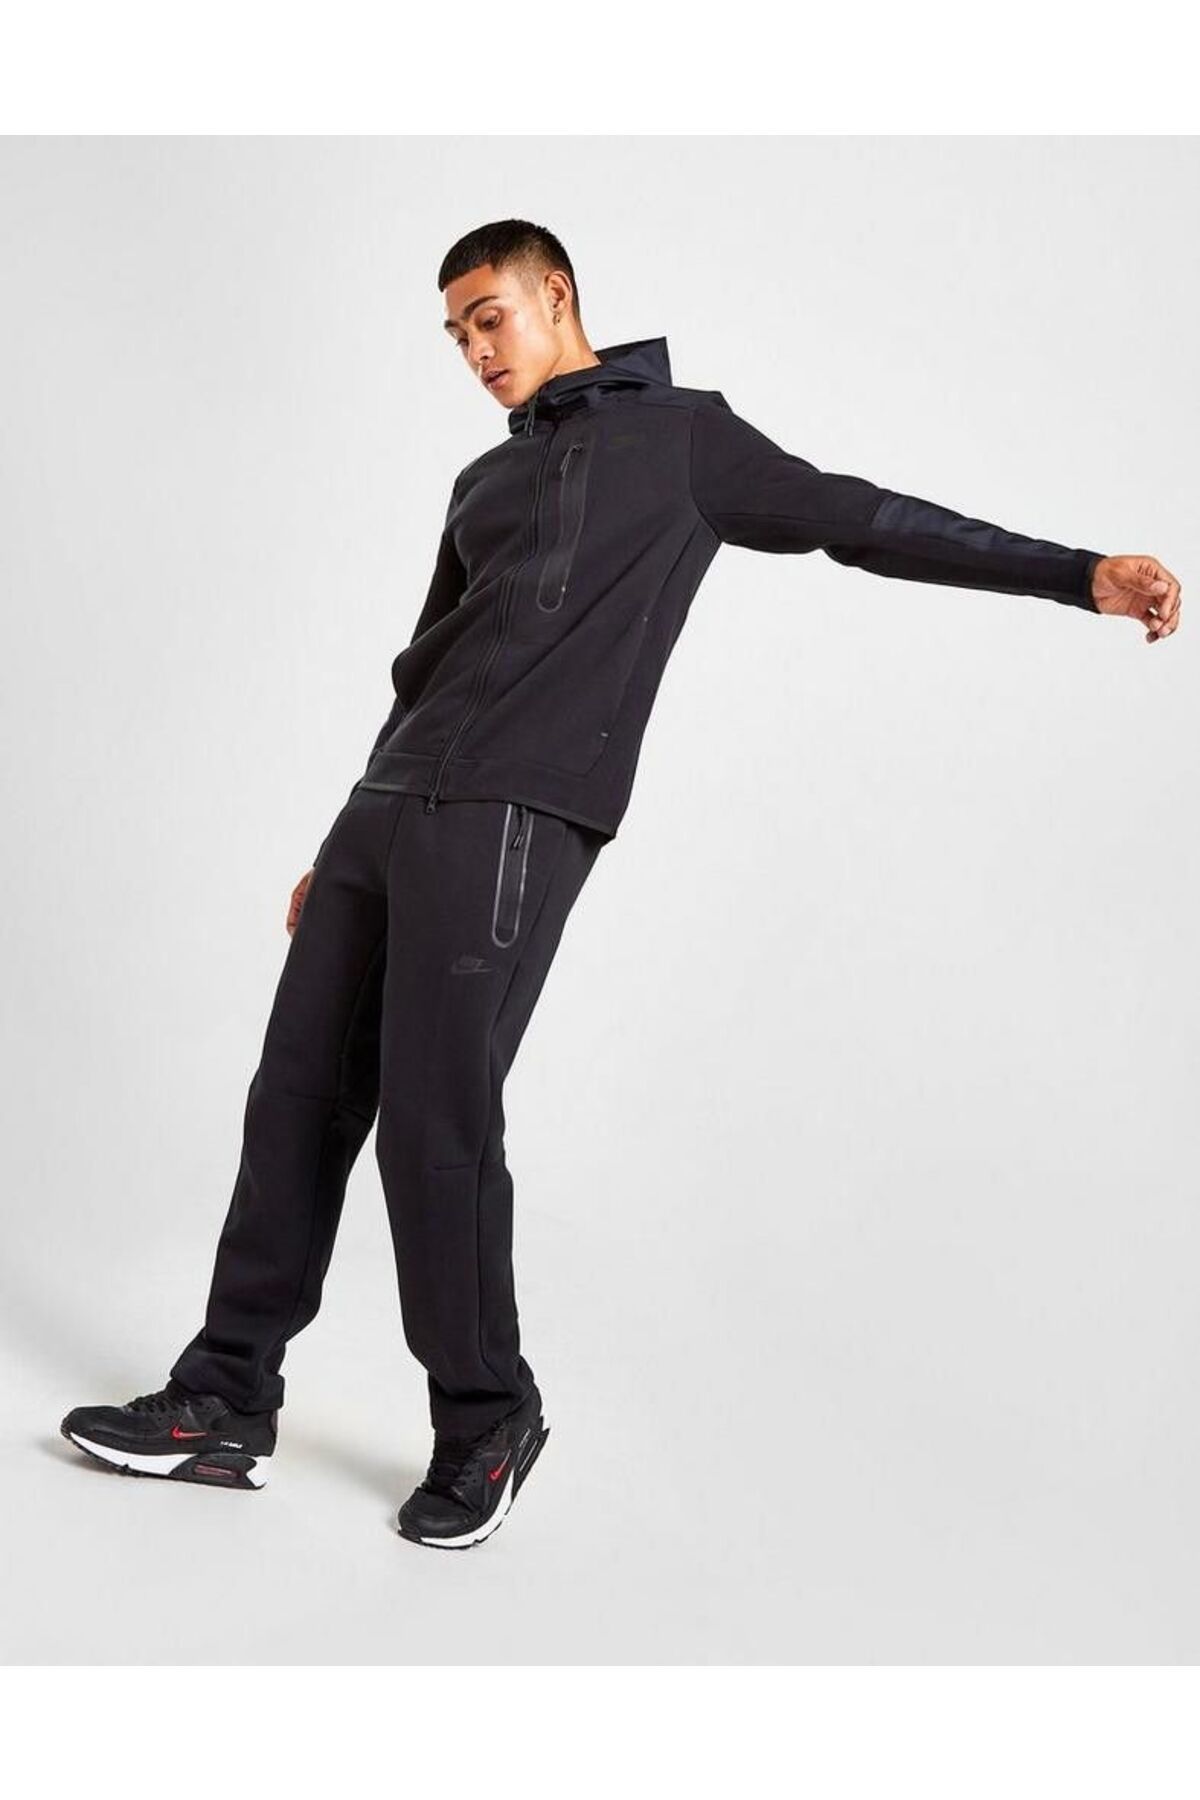 Nike Sportswear Tech Fleece Erkek Eşofman Altı - DQ4312-010 aslan sport